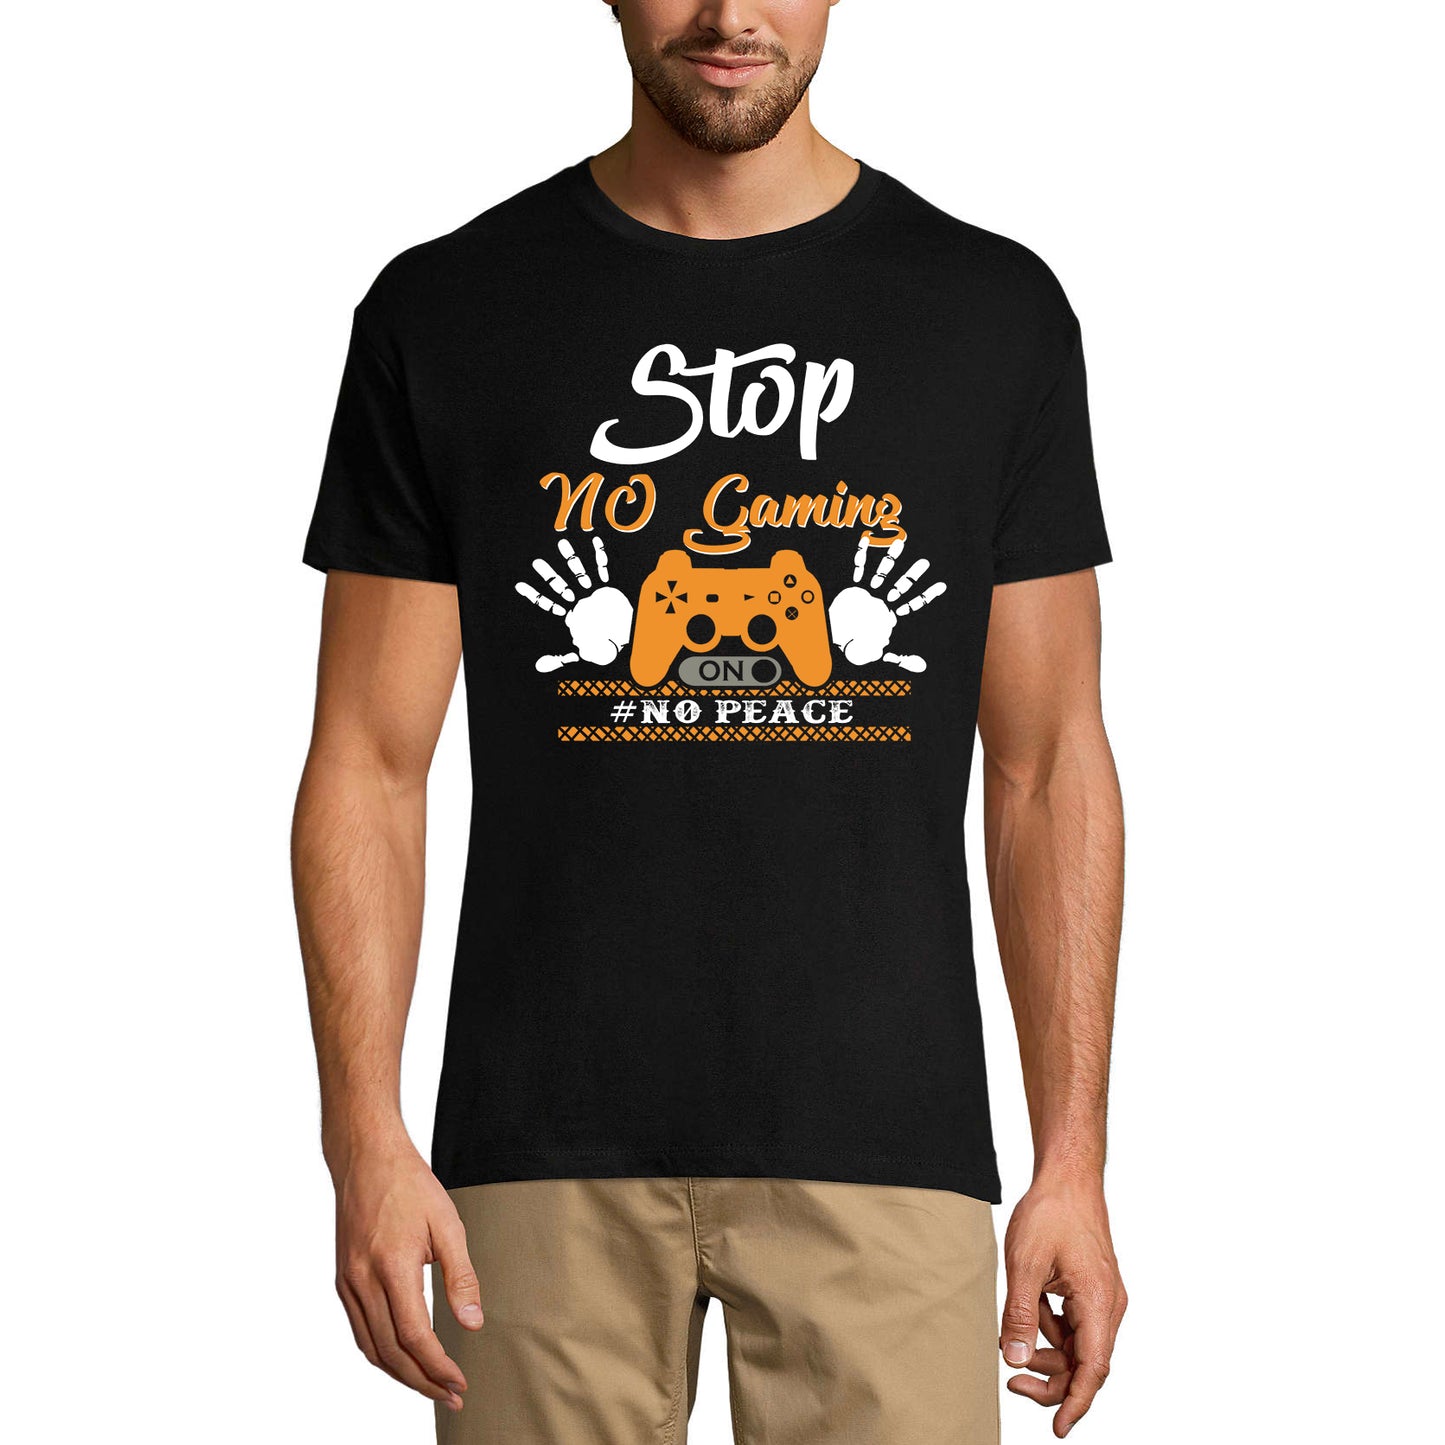 ULTRABASIC Herren-Grafik-T-Shirt – No Gaming No Peace – lustiges Shirt für Gamer